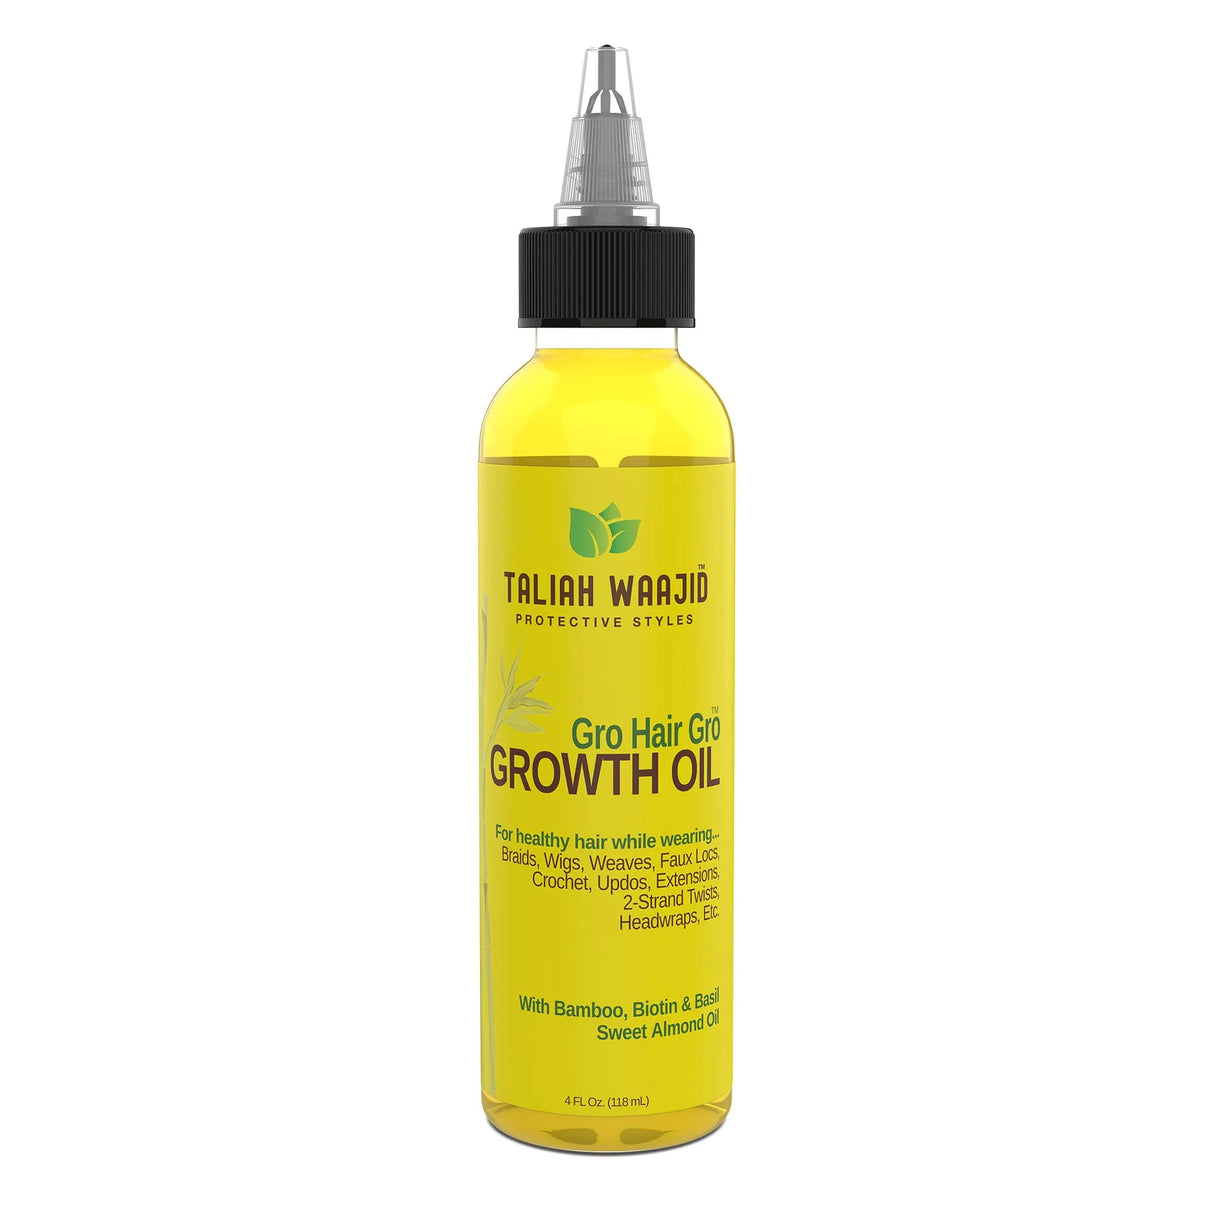 Taliah Waajid™ Gro Hair Gro™ Bamboo And Coconut Milk Growth Oil